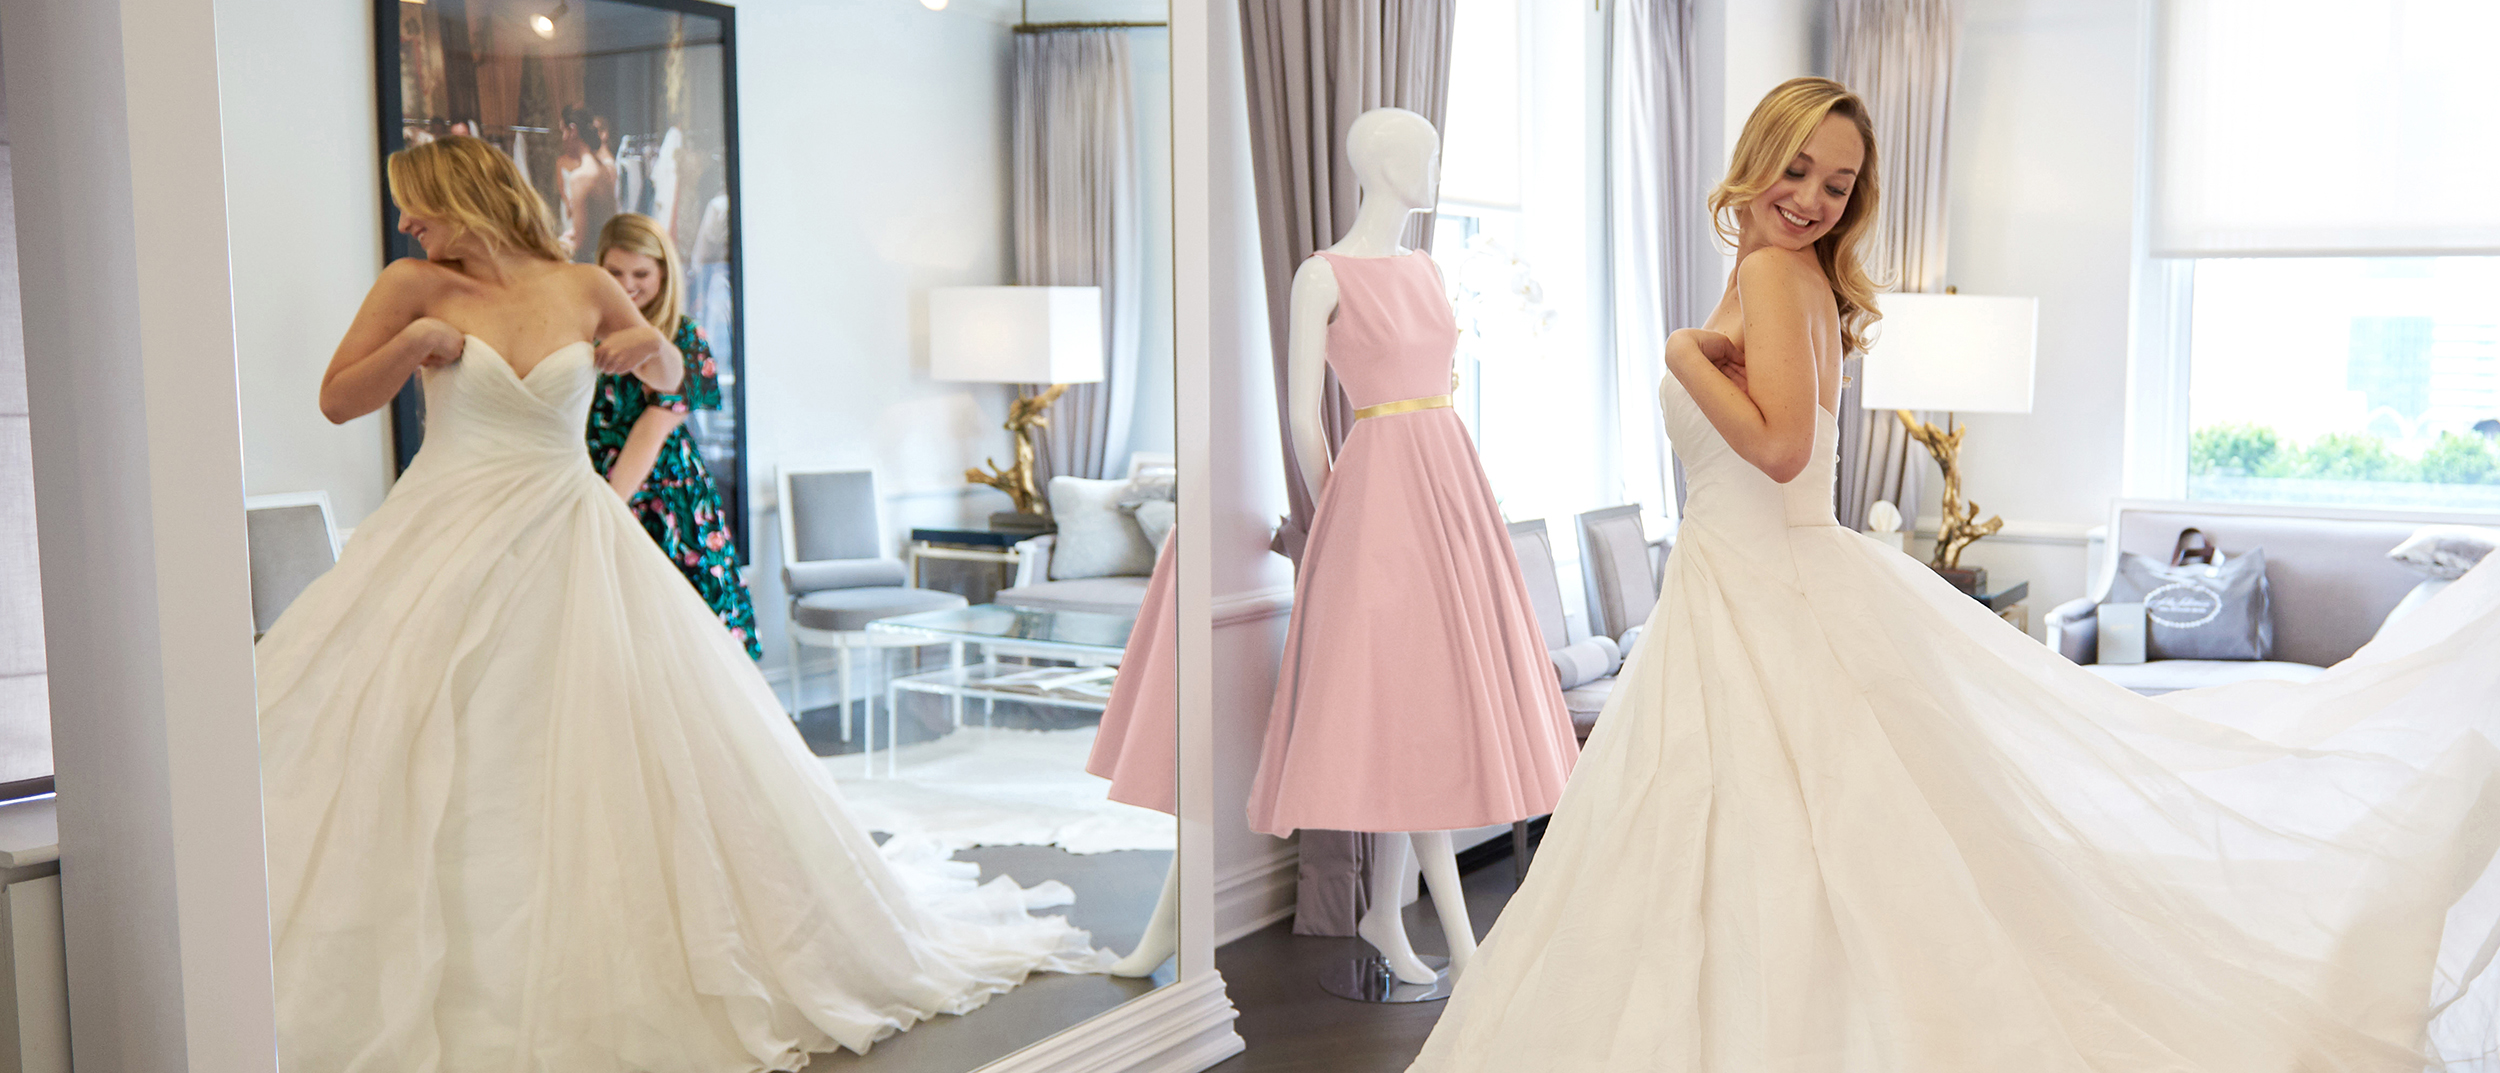 Julie Sabatino’s 5 Tips for Choosing a Wedding Dress You Love